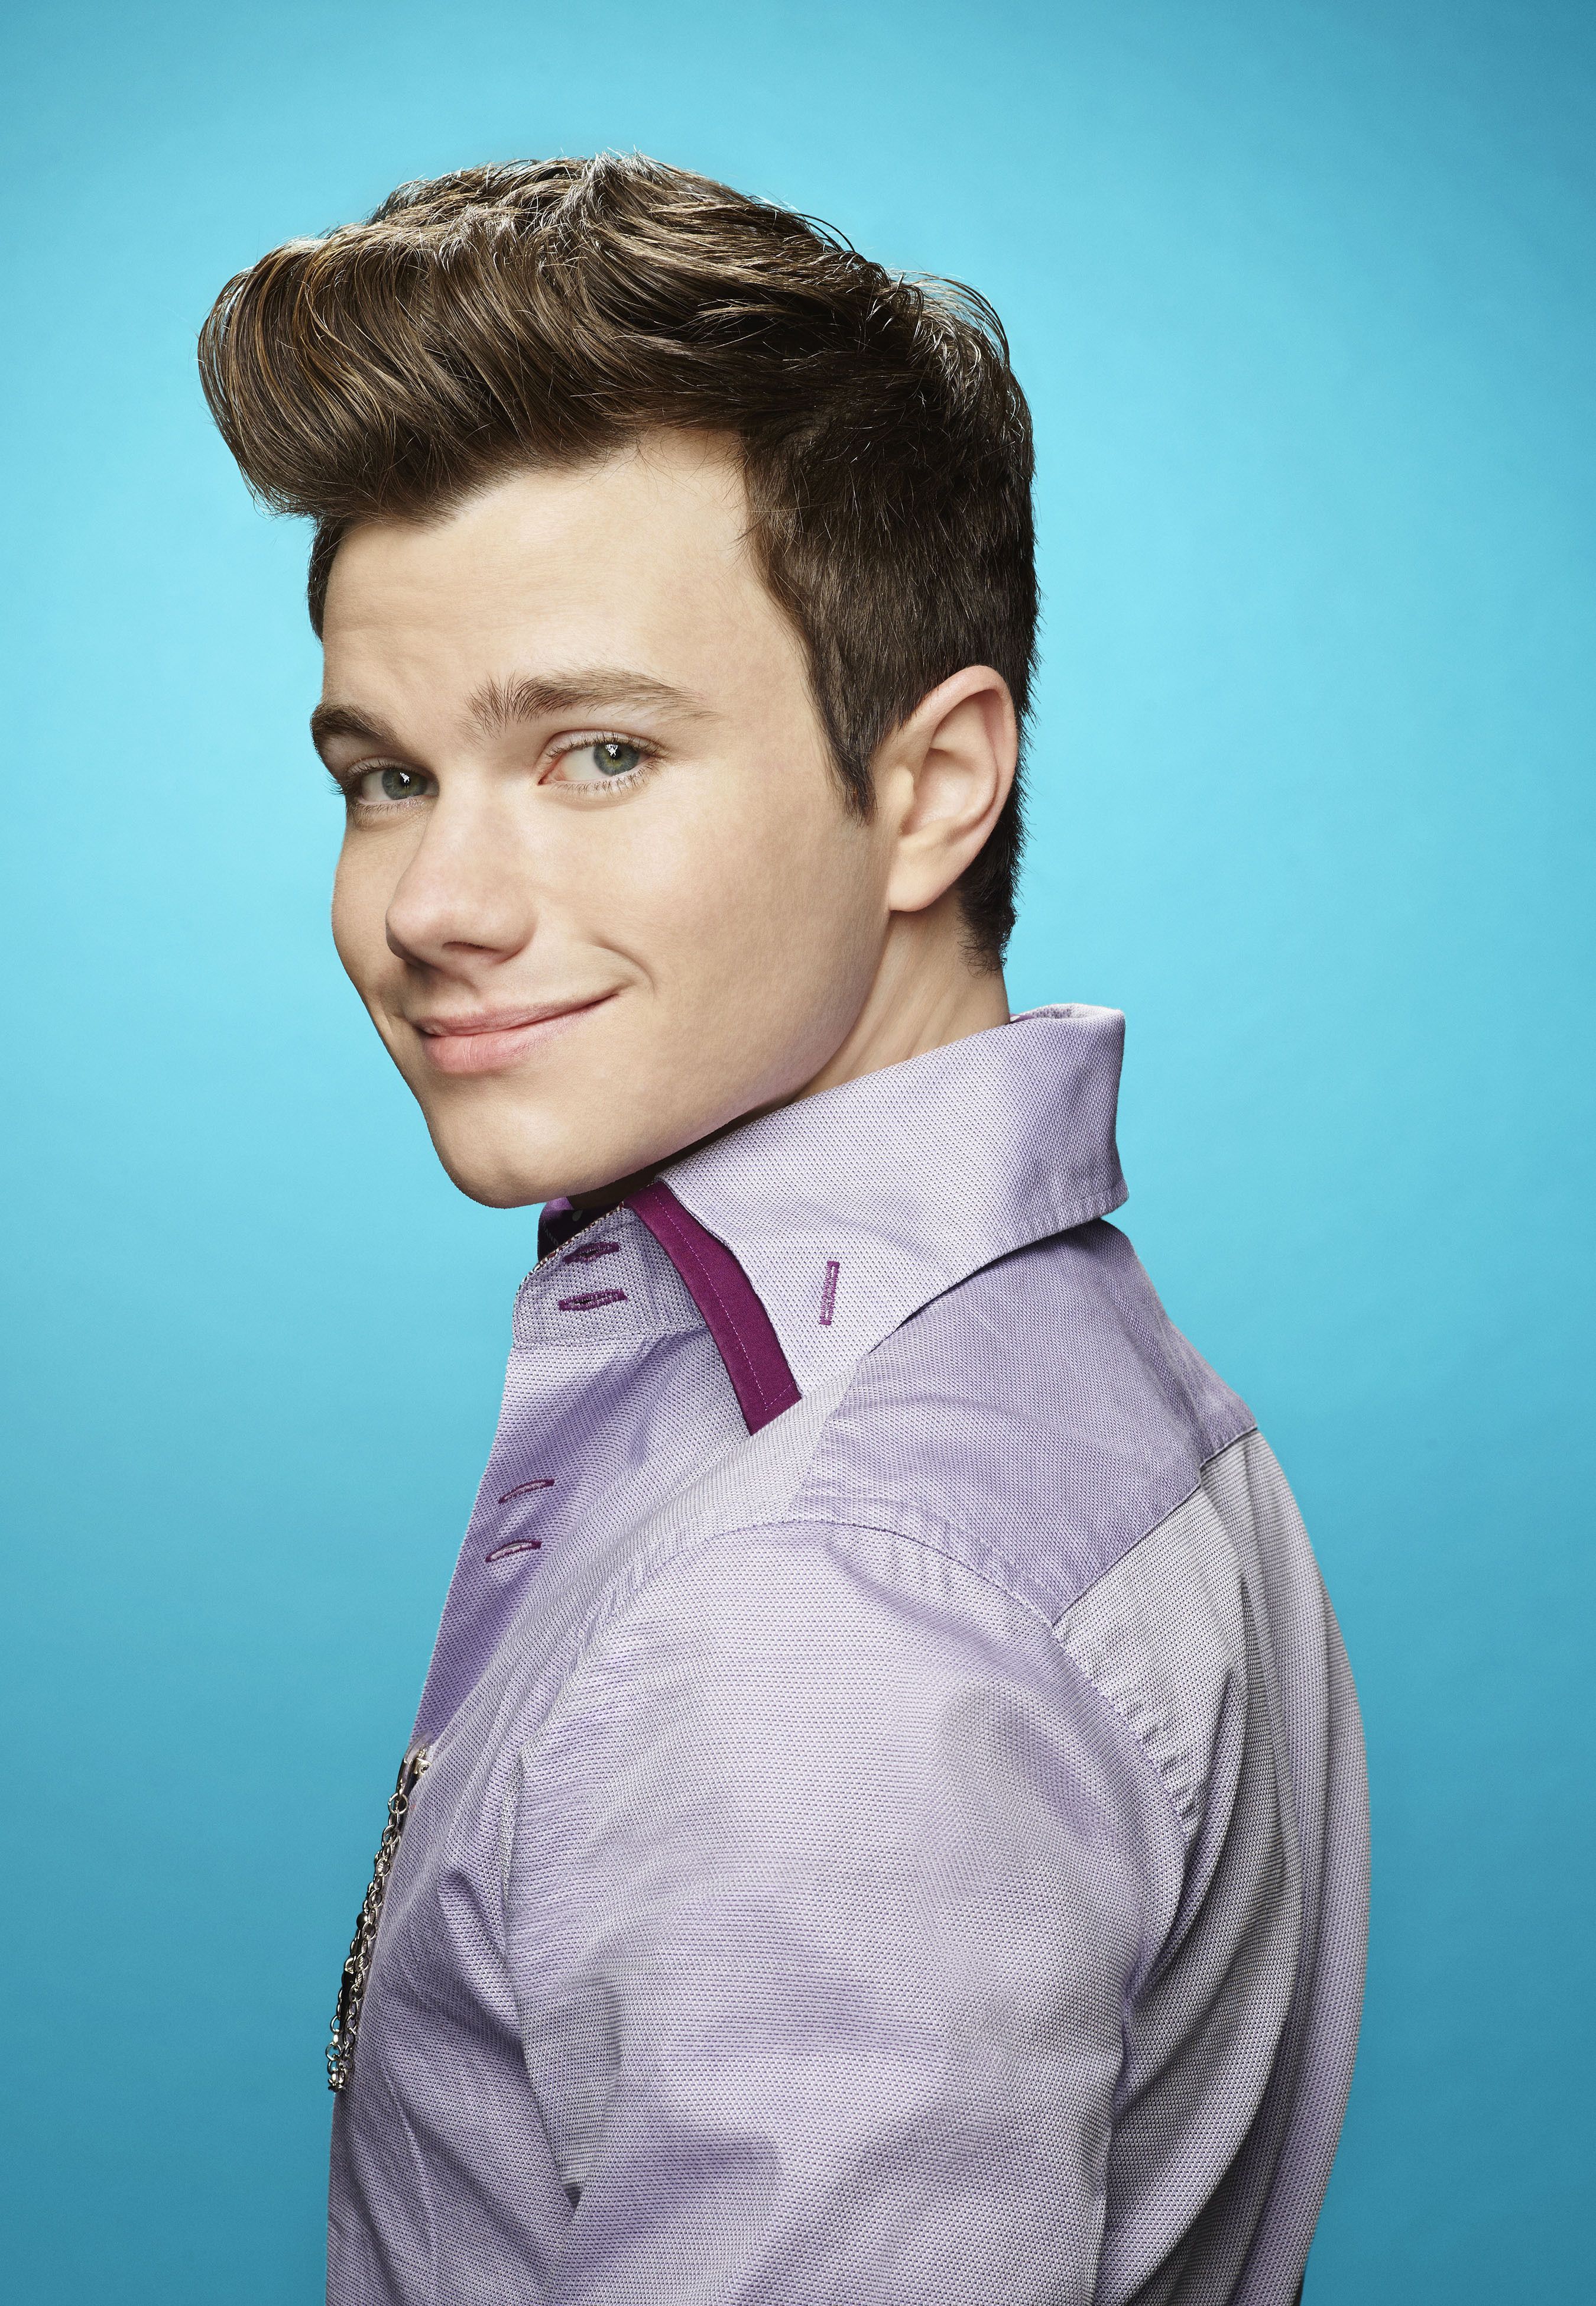 Glee Season 6 Promo. Kurt. Chris colfer, Glee cast, Glee season 6